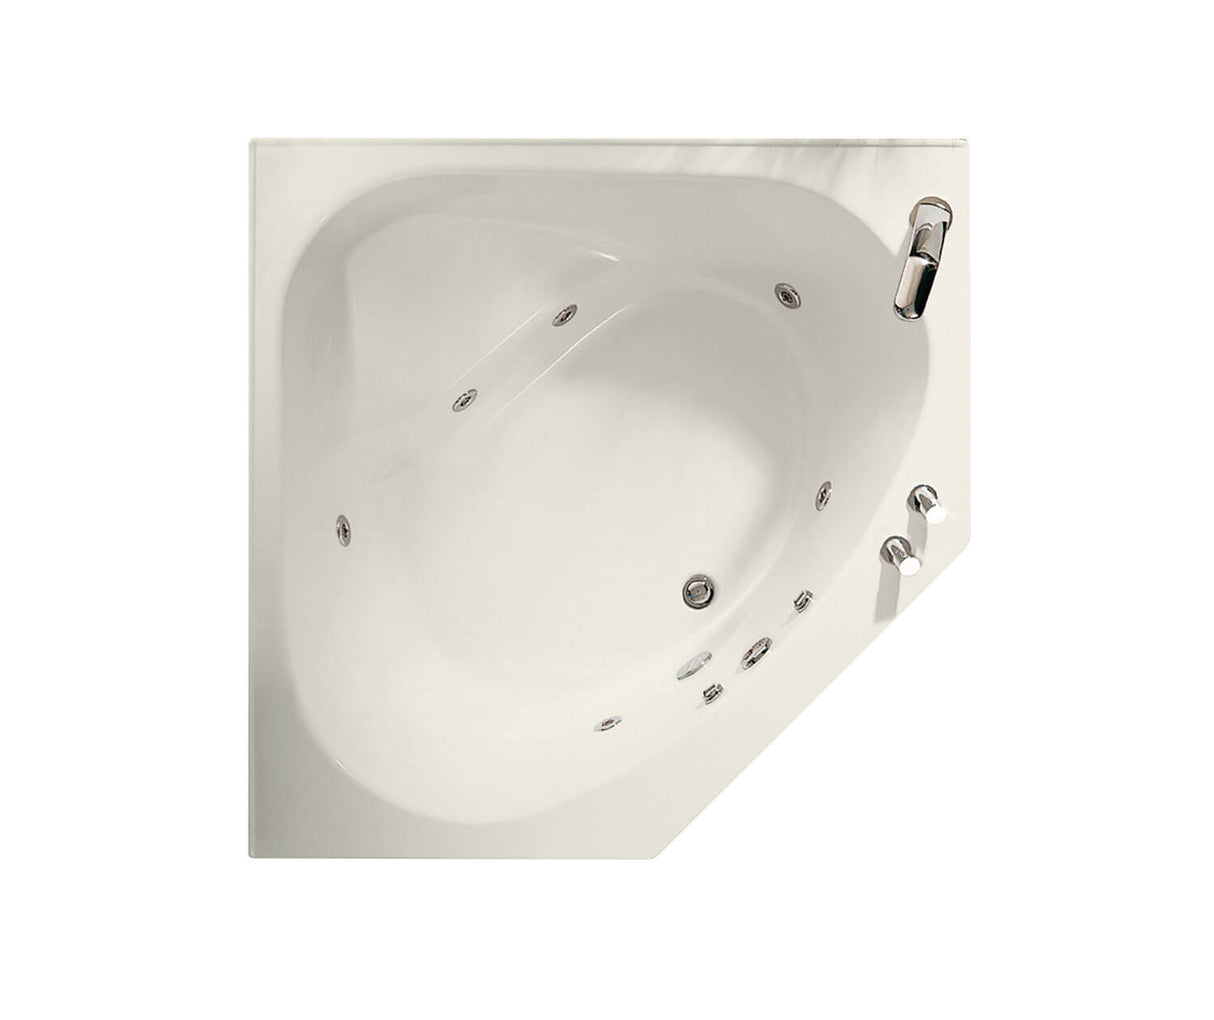 MAAX 100875-003-007-000 Tandem 5454 Acrylic Corner Center Drain Whirlpool Bathtub in Biscuit